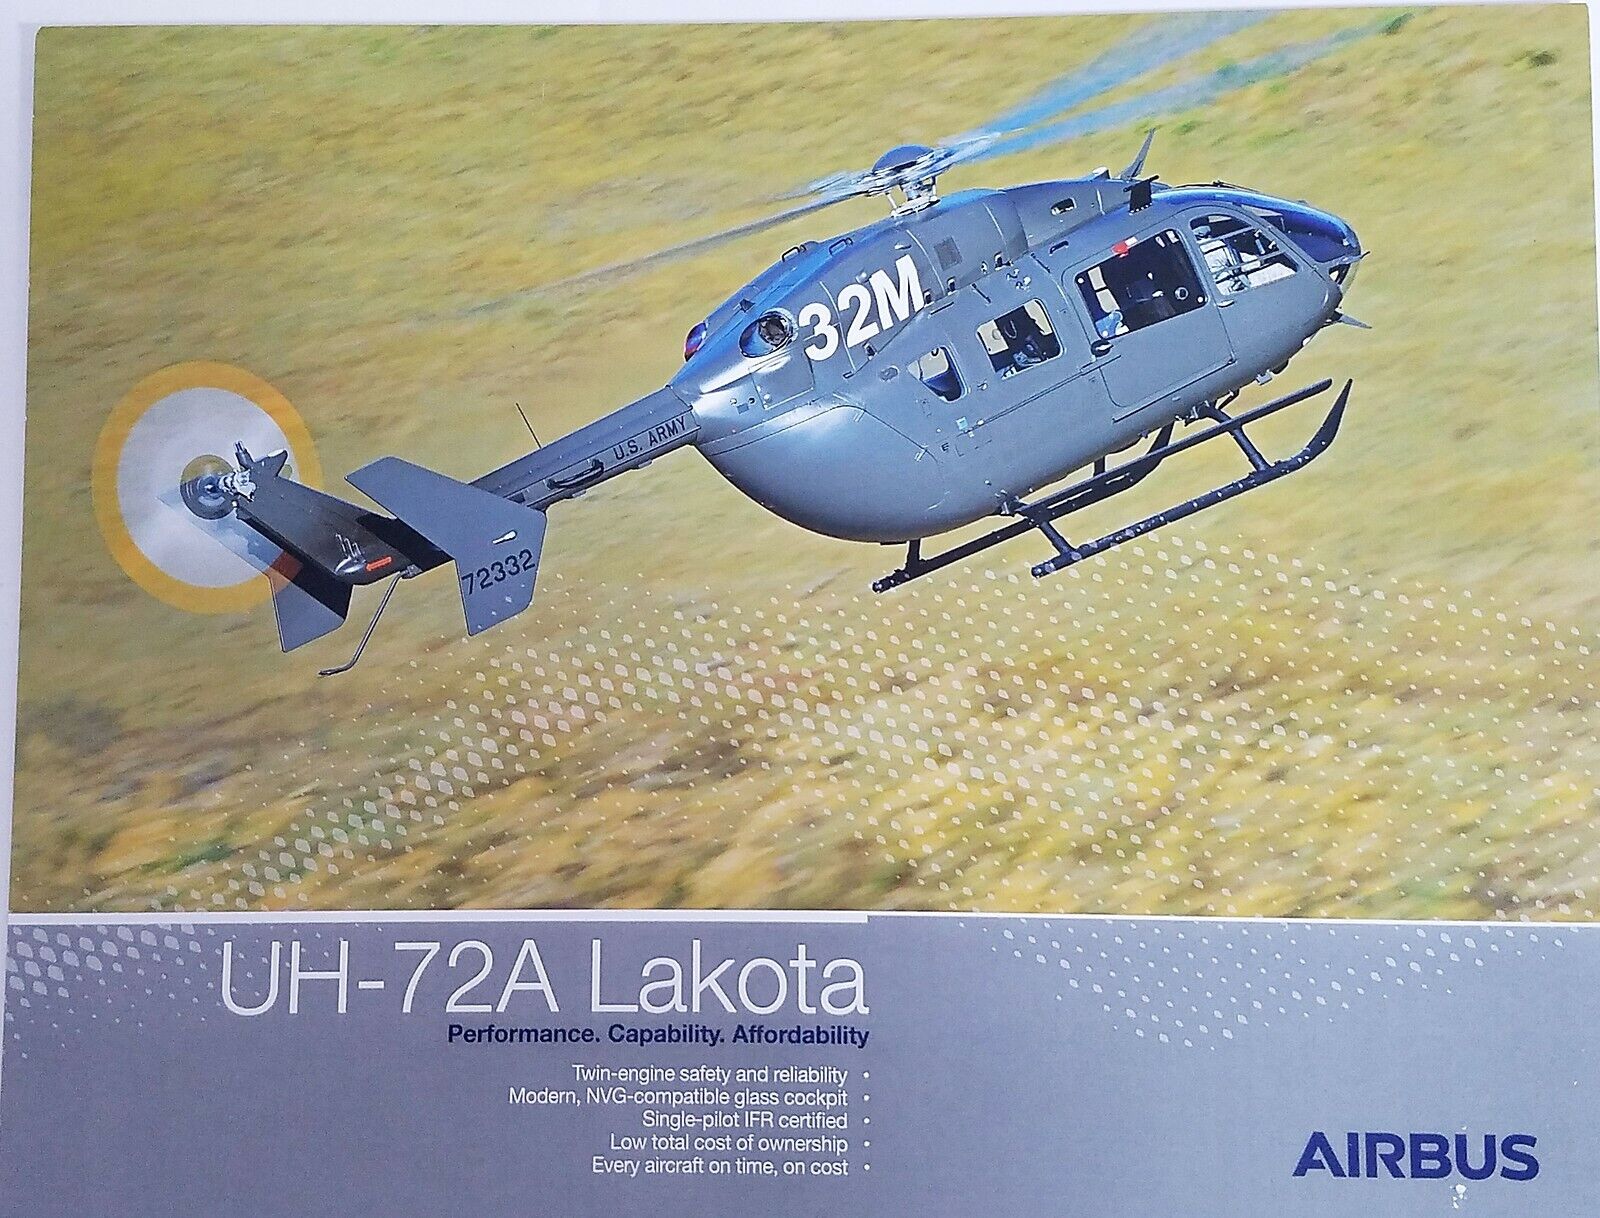 Airbus UH-72A Lakota Helicopter Data Sheet Military